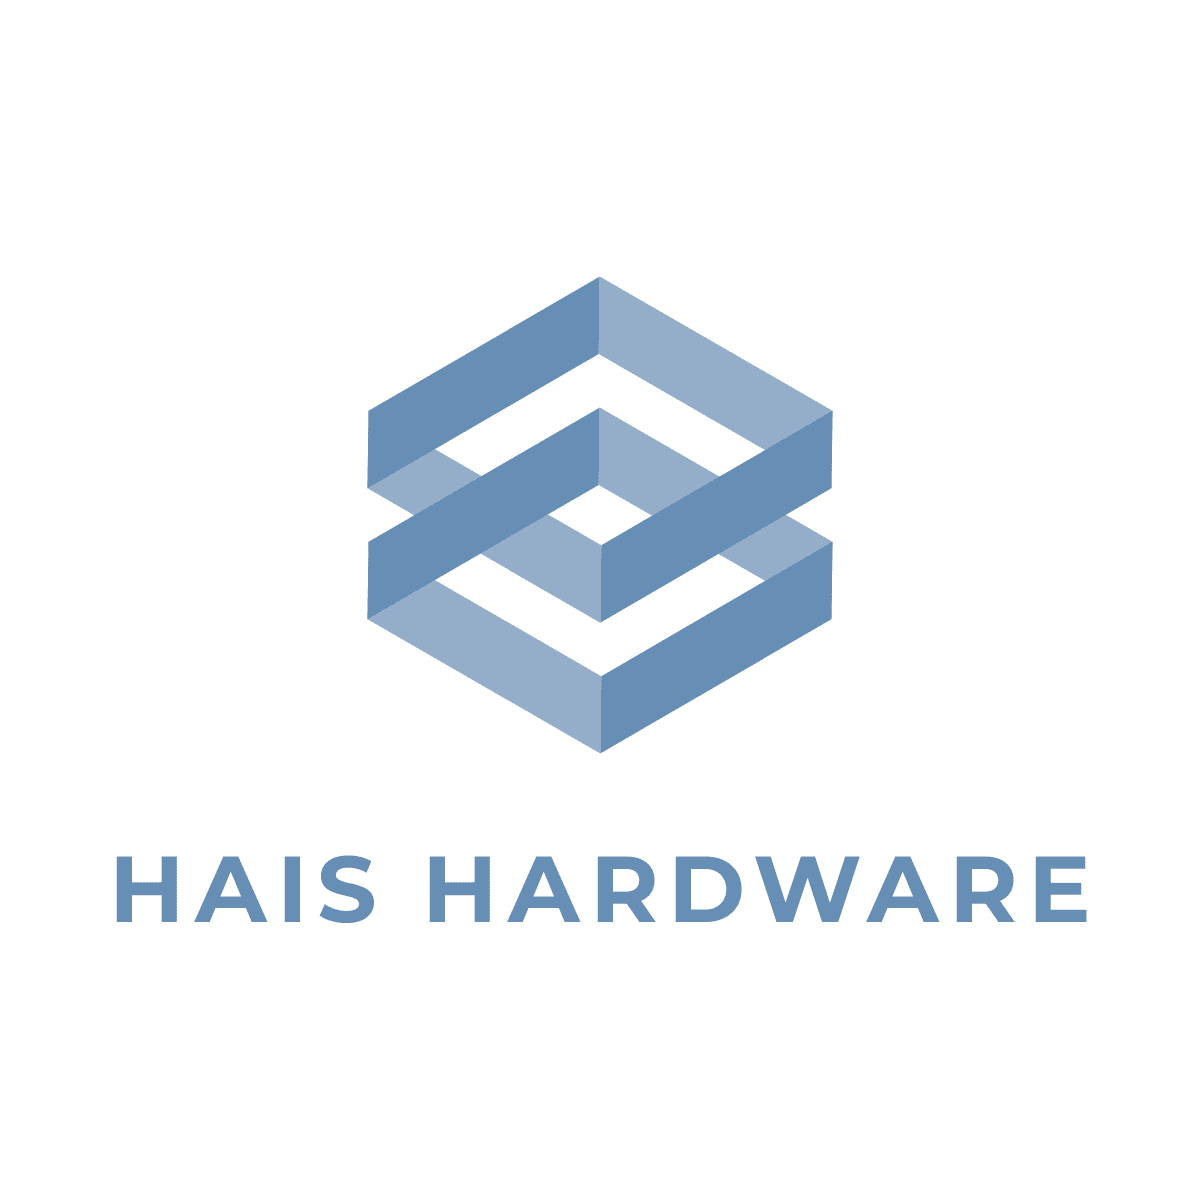 Hais Hardware